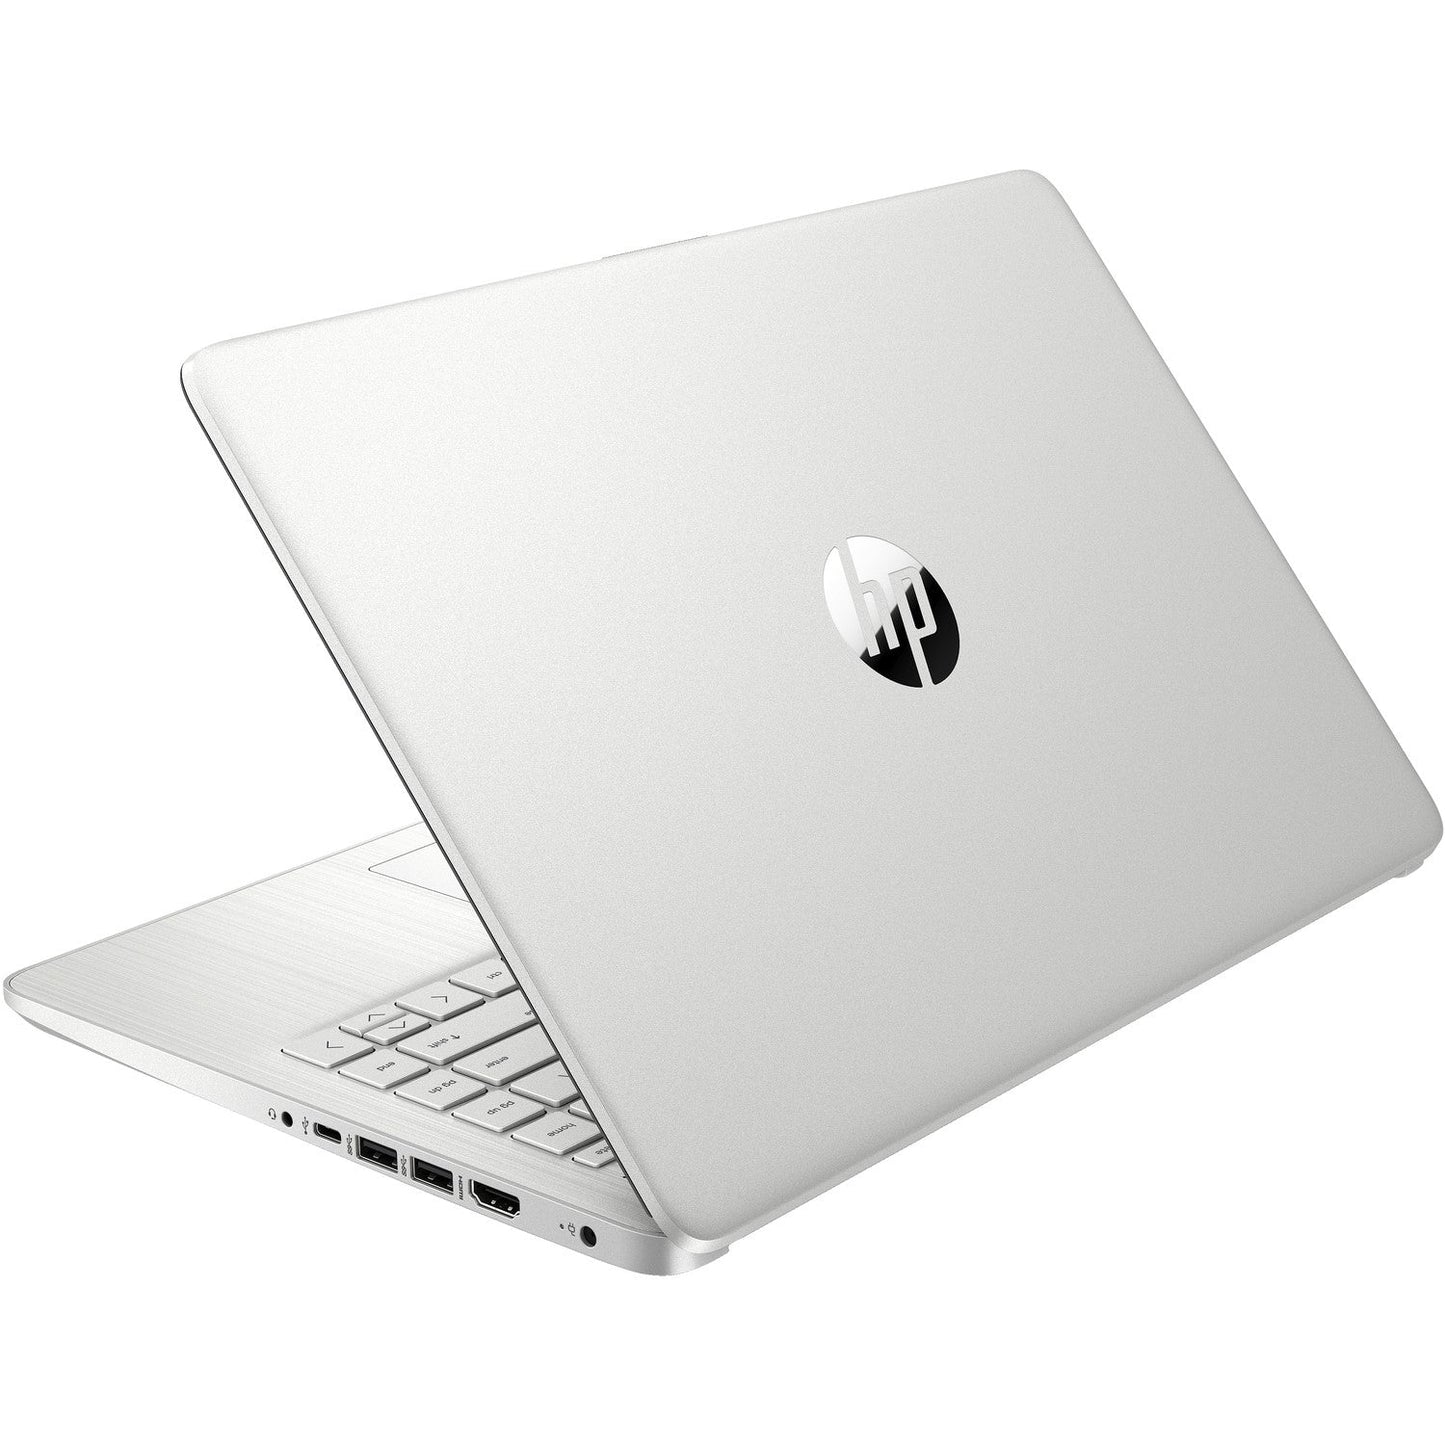 HP 15S FQ4010SA - i7 11th Gen, 8GB RAM, 512GB SSD, 15.6" Laptop